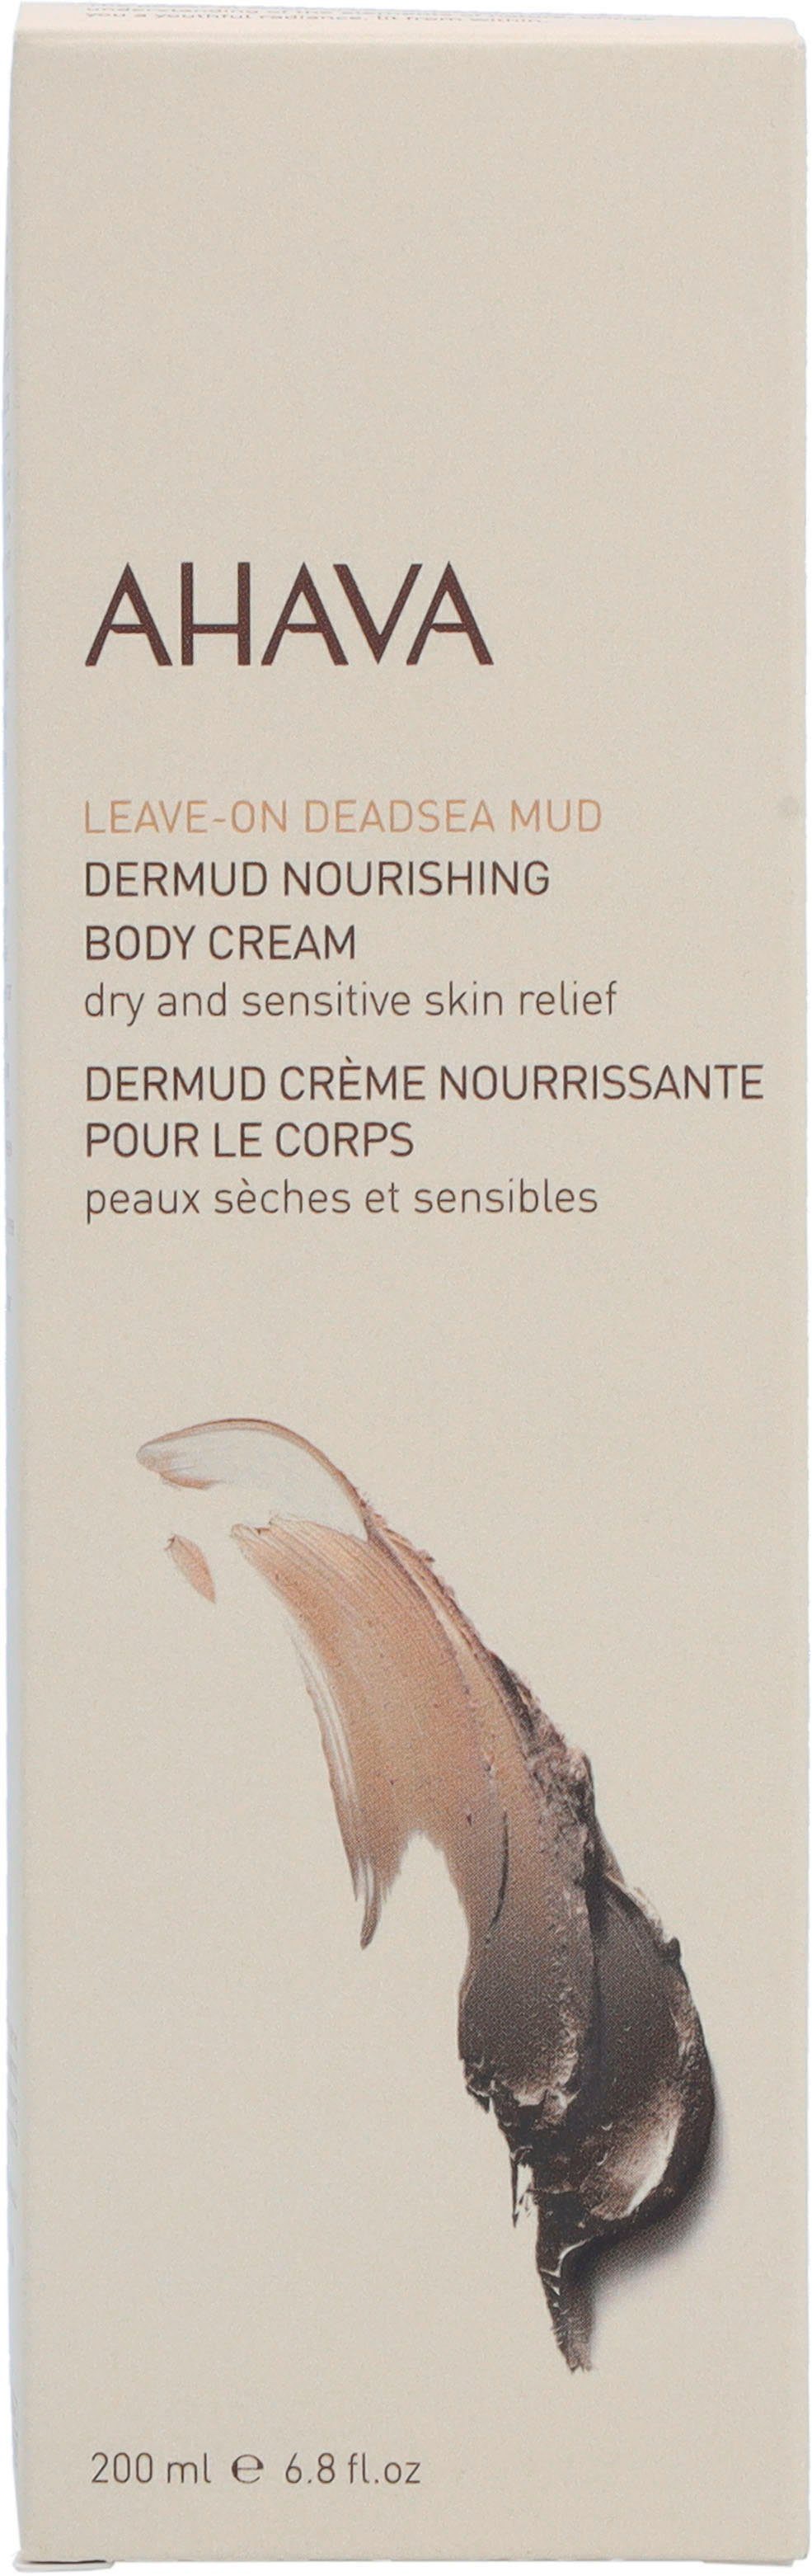 Cream Mud Körpercreme Dermud Deadsea AHAVA Nourishing Body